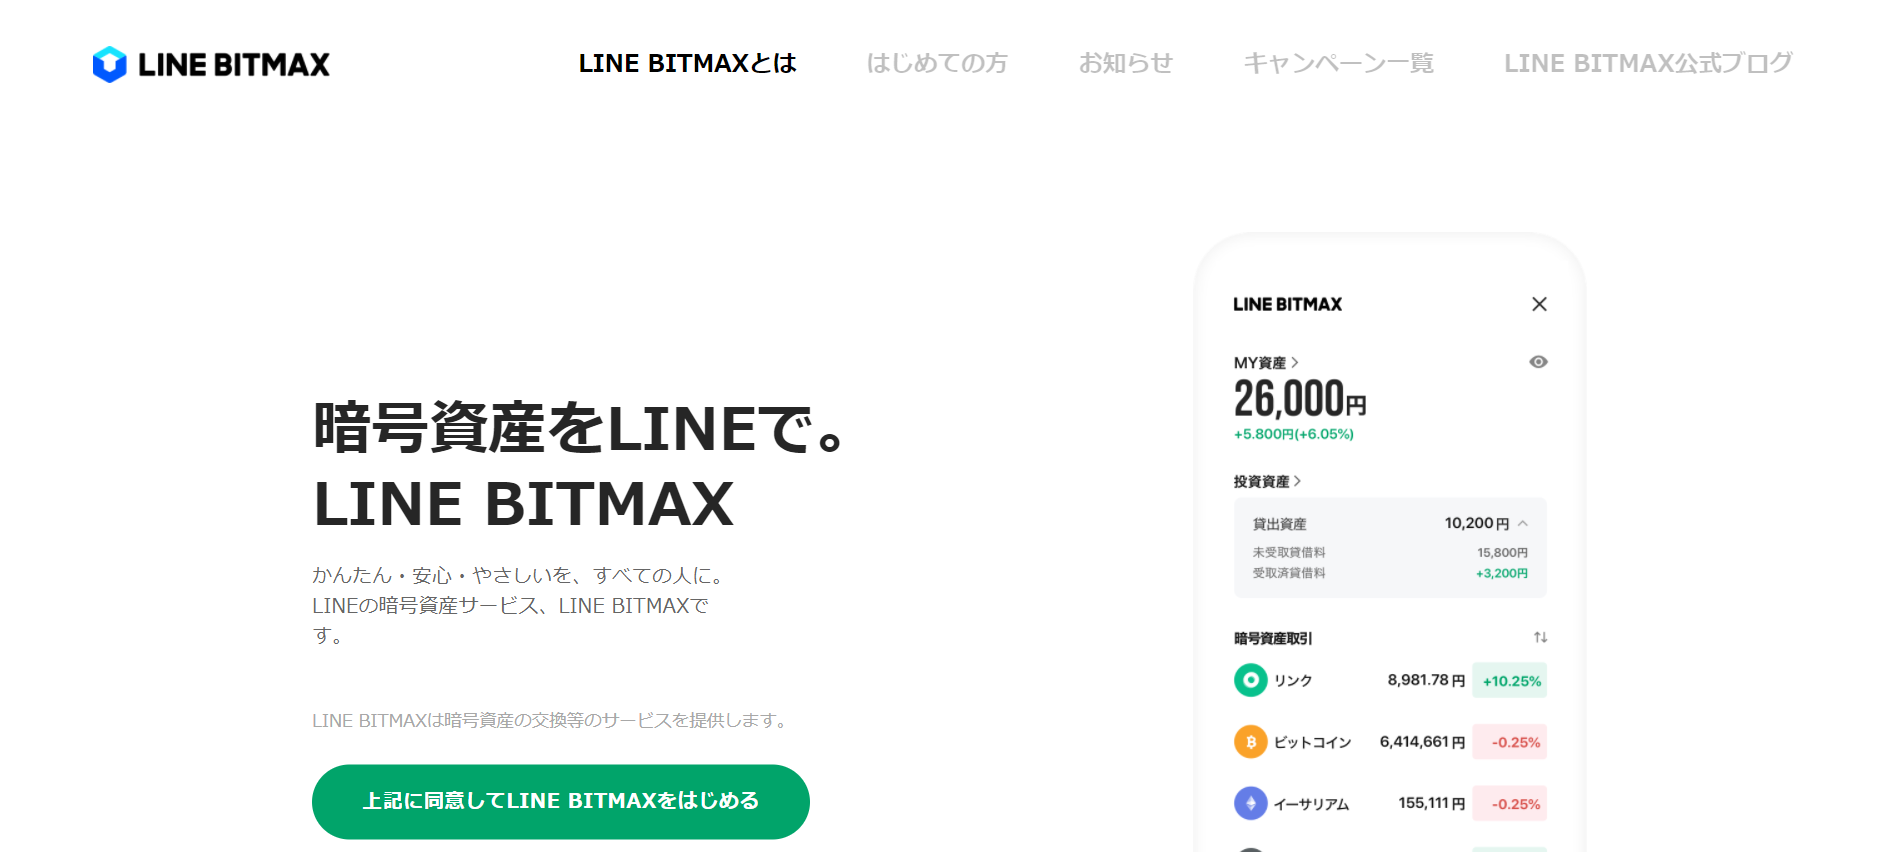 LINE BITMAX 